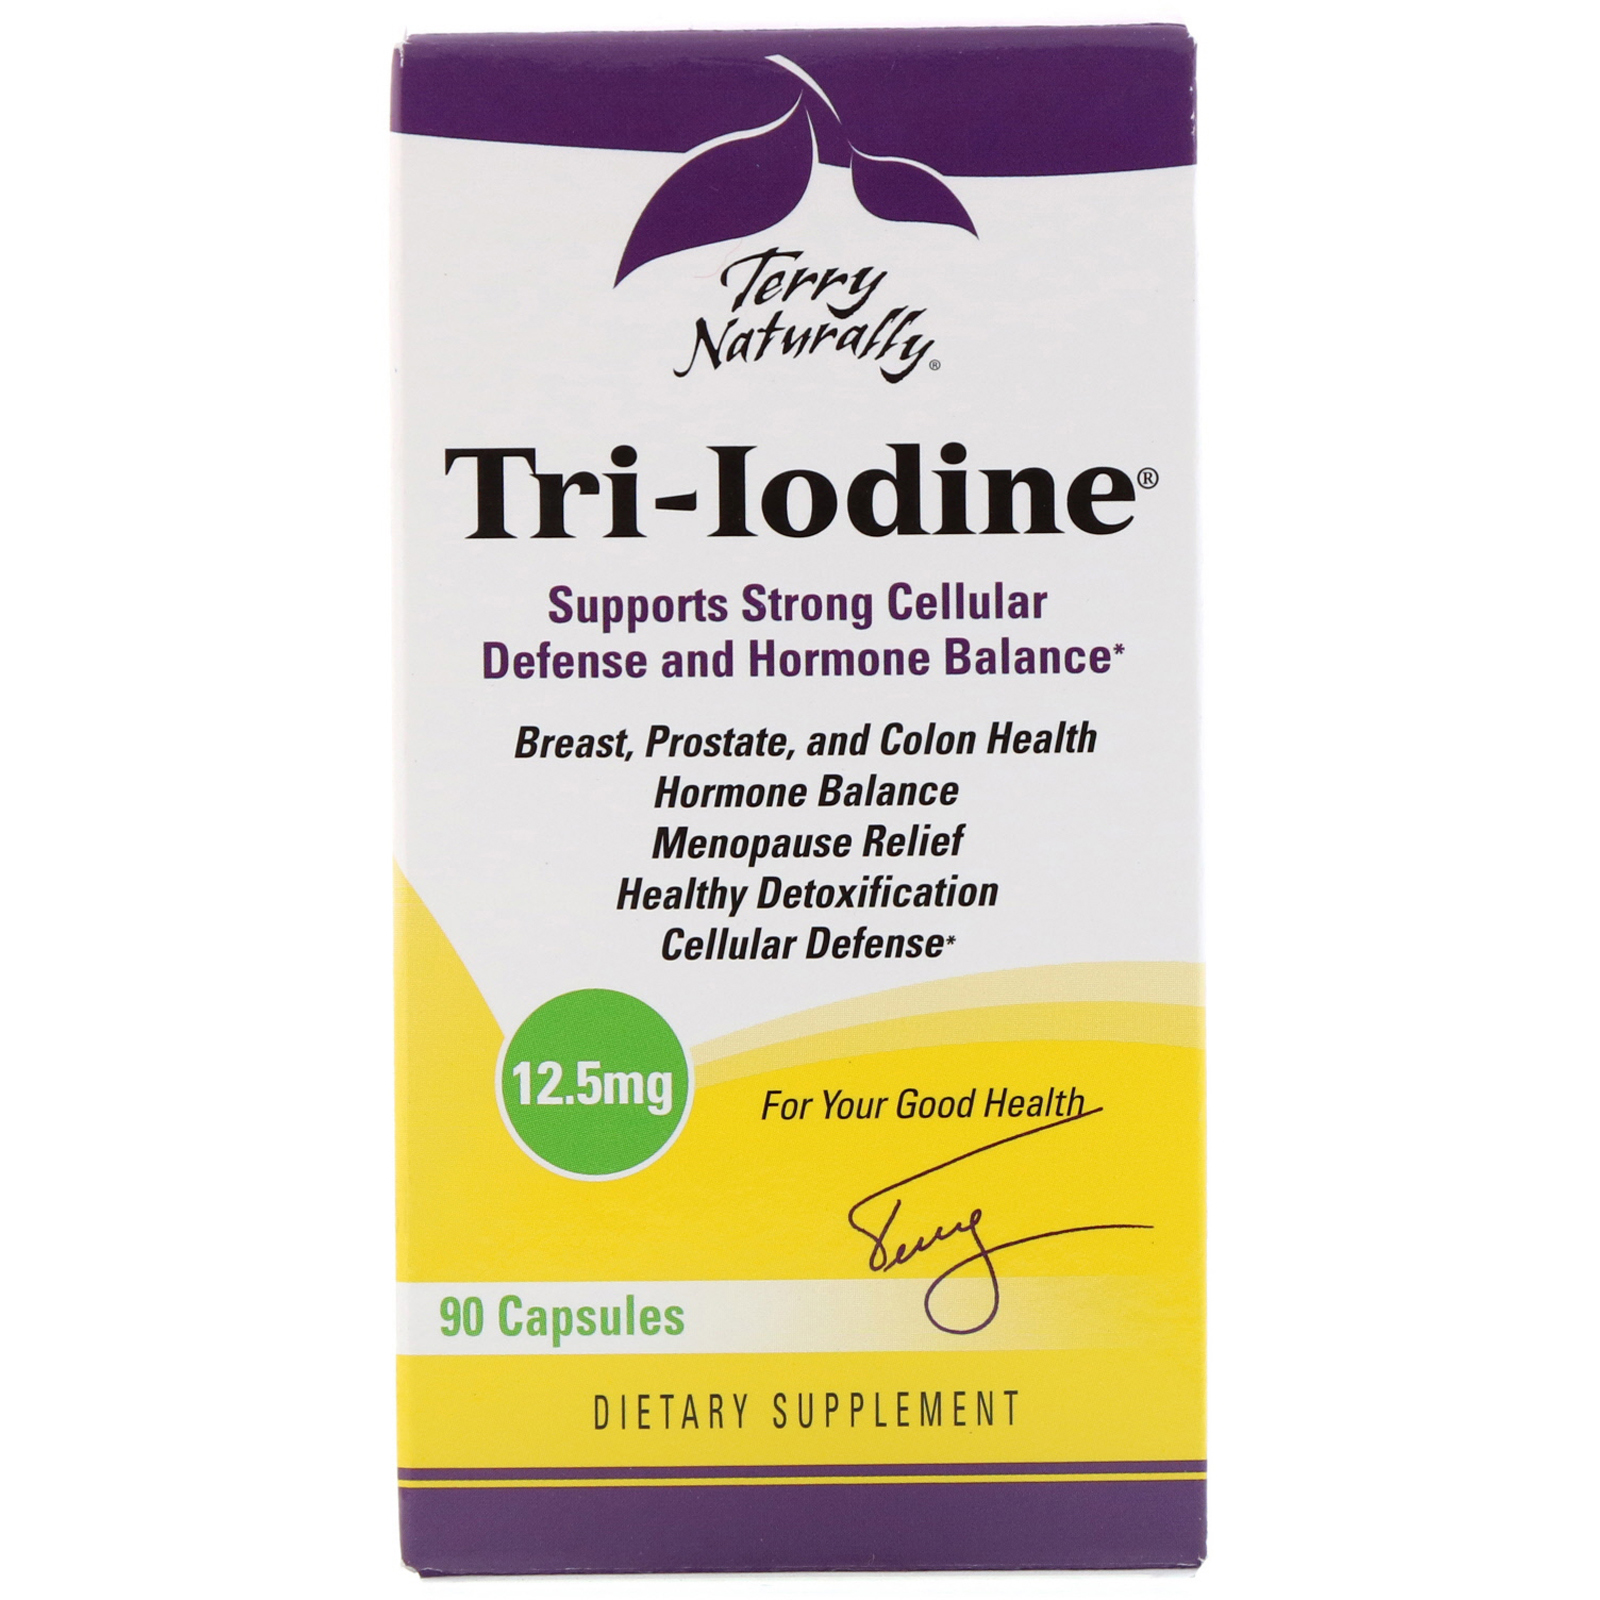 iodine 12.5 mg supplements